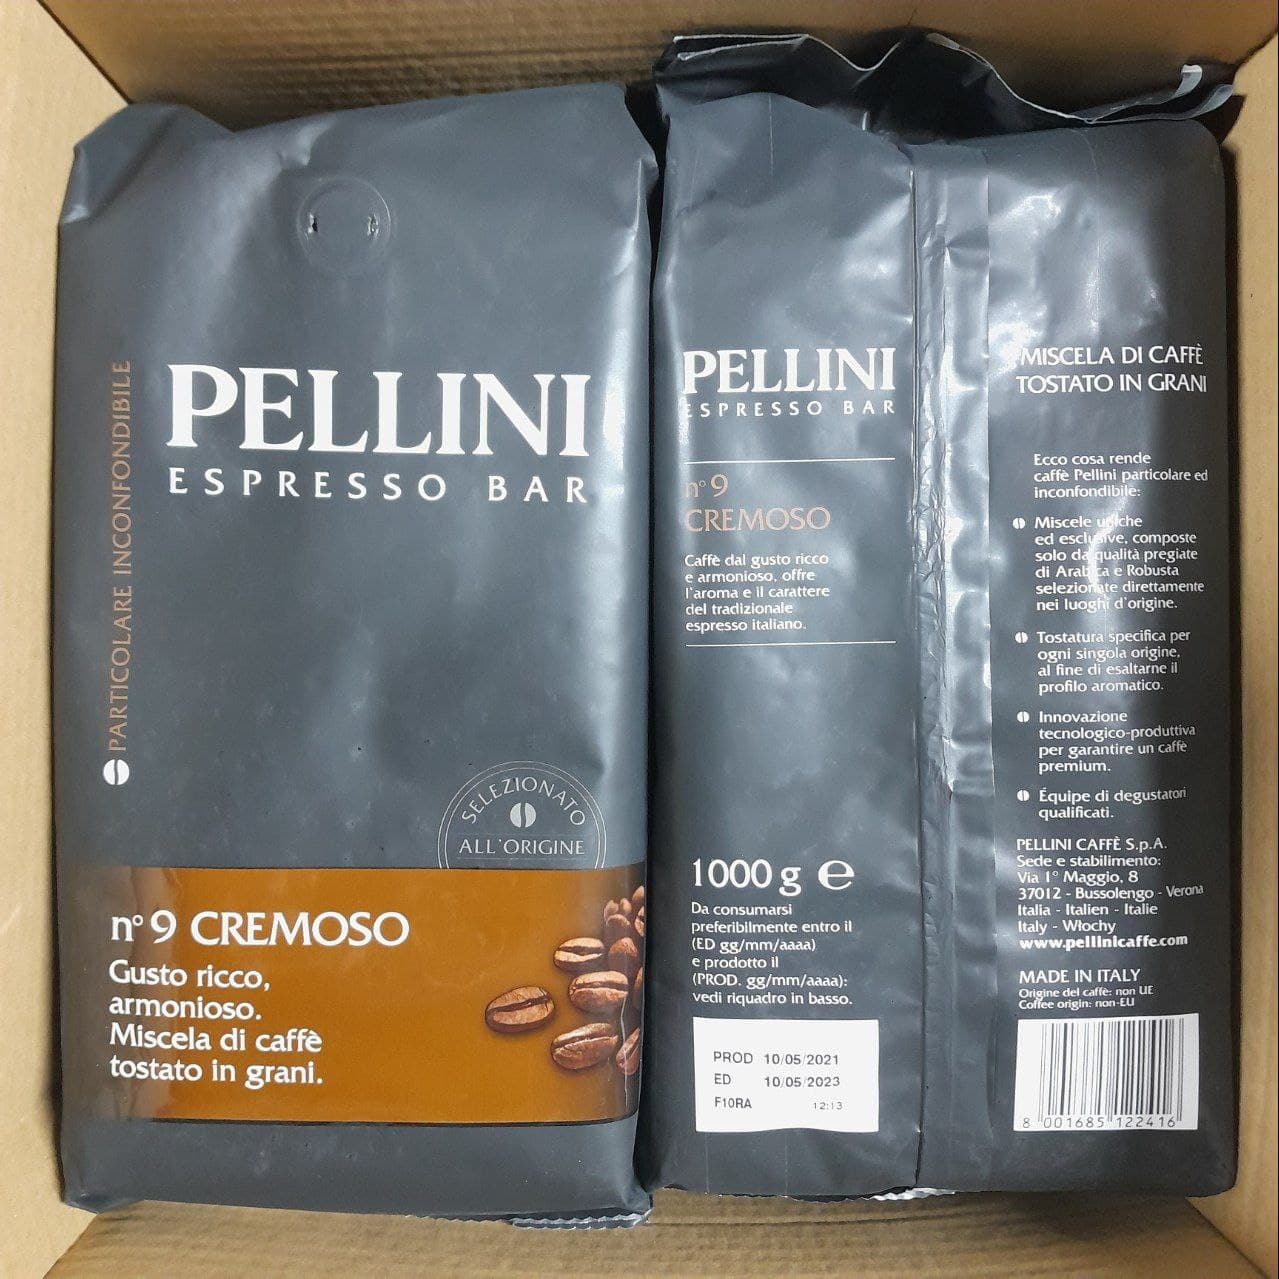 Pupiņu kafija "PELLINI" Espresso Bar Cremoso